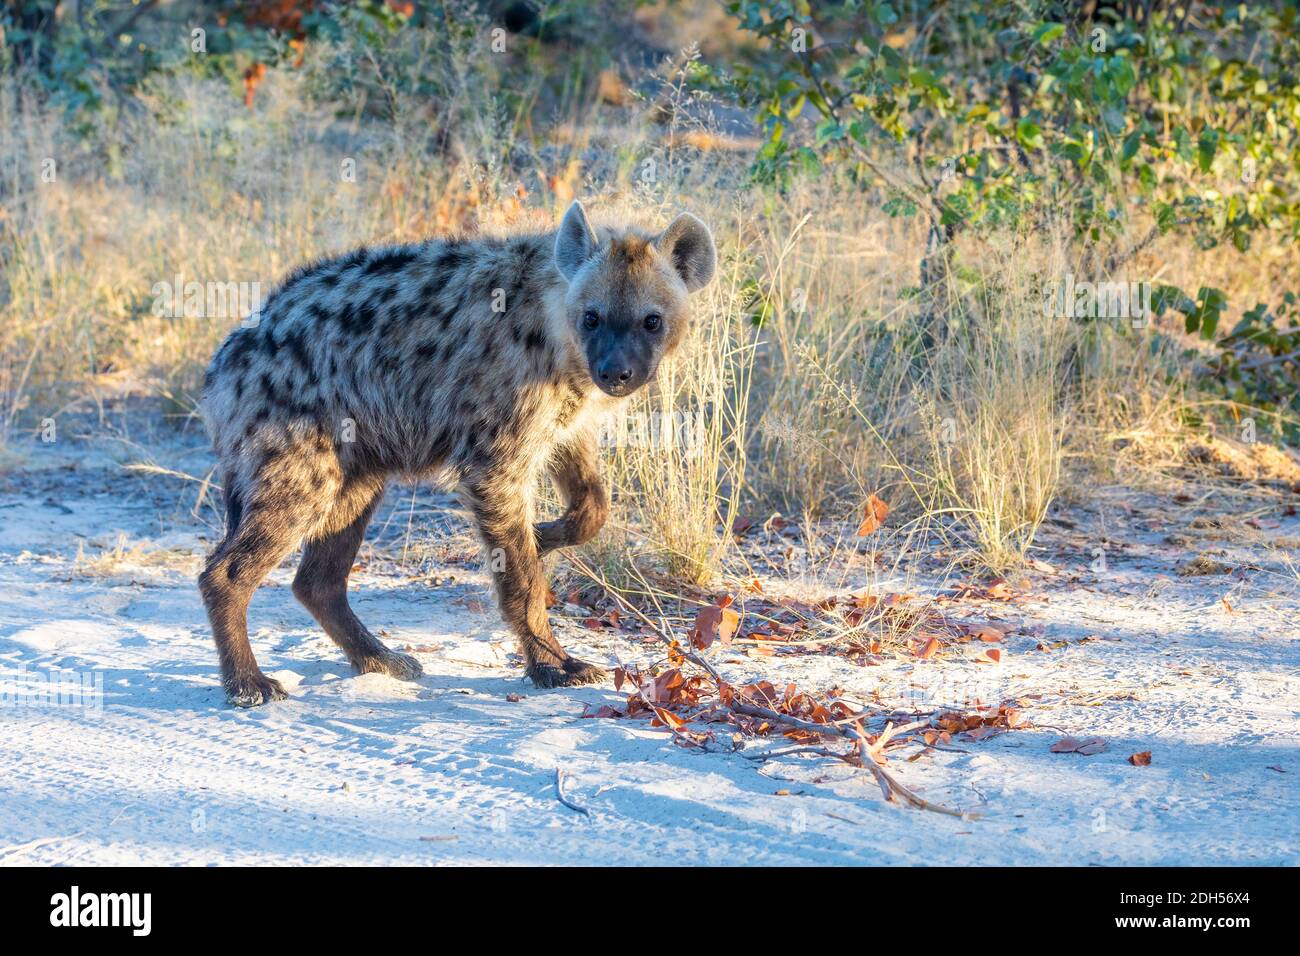 Cute young Spotted hyena, Botswana Africa wildlife Stock Photo